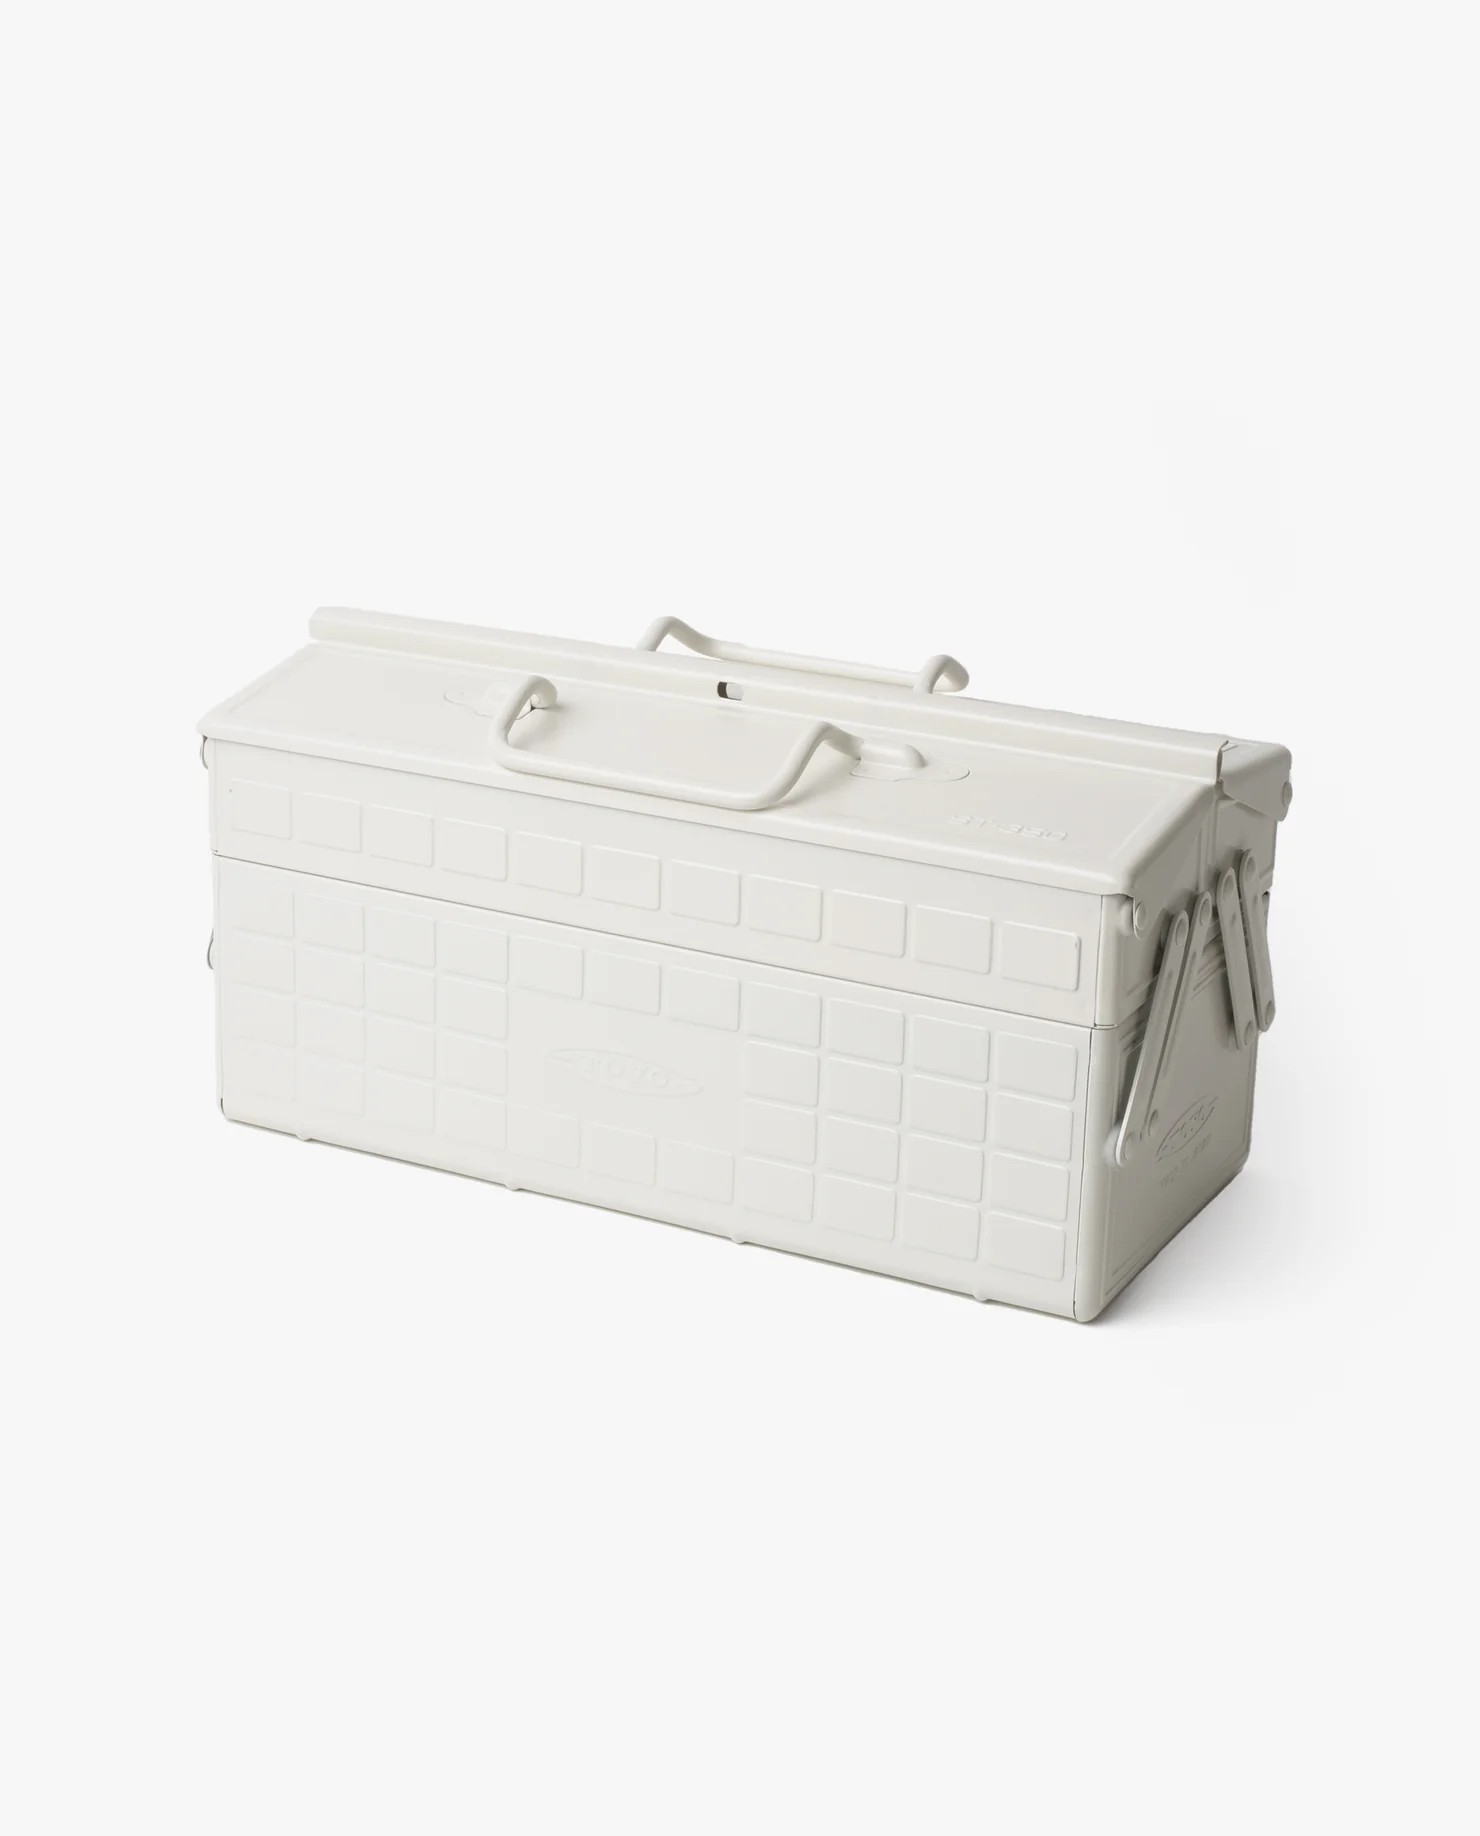 TOYO STEEL TOOL BOX ST-350 - WHITE